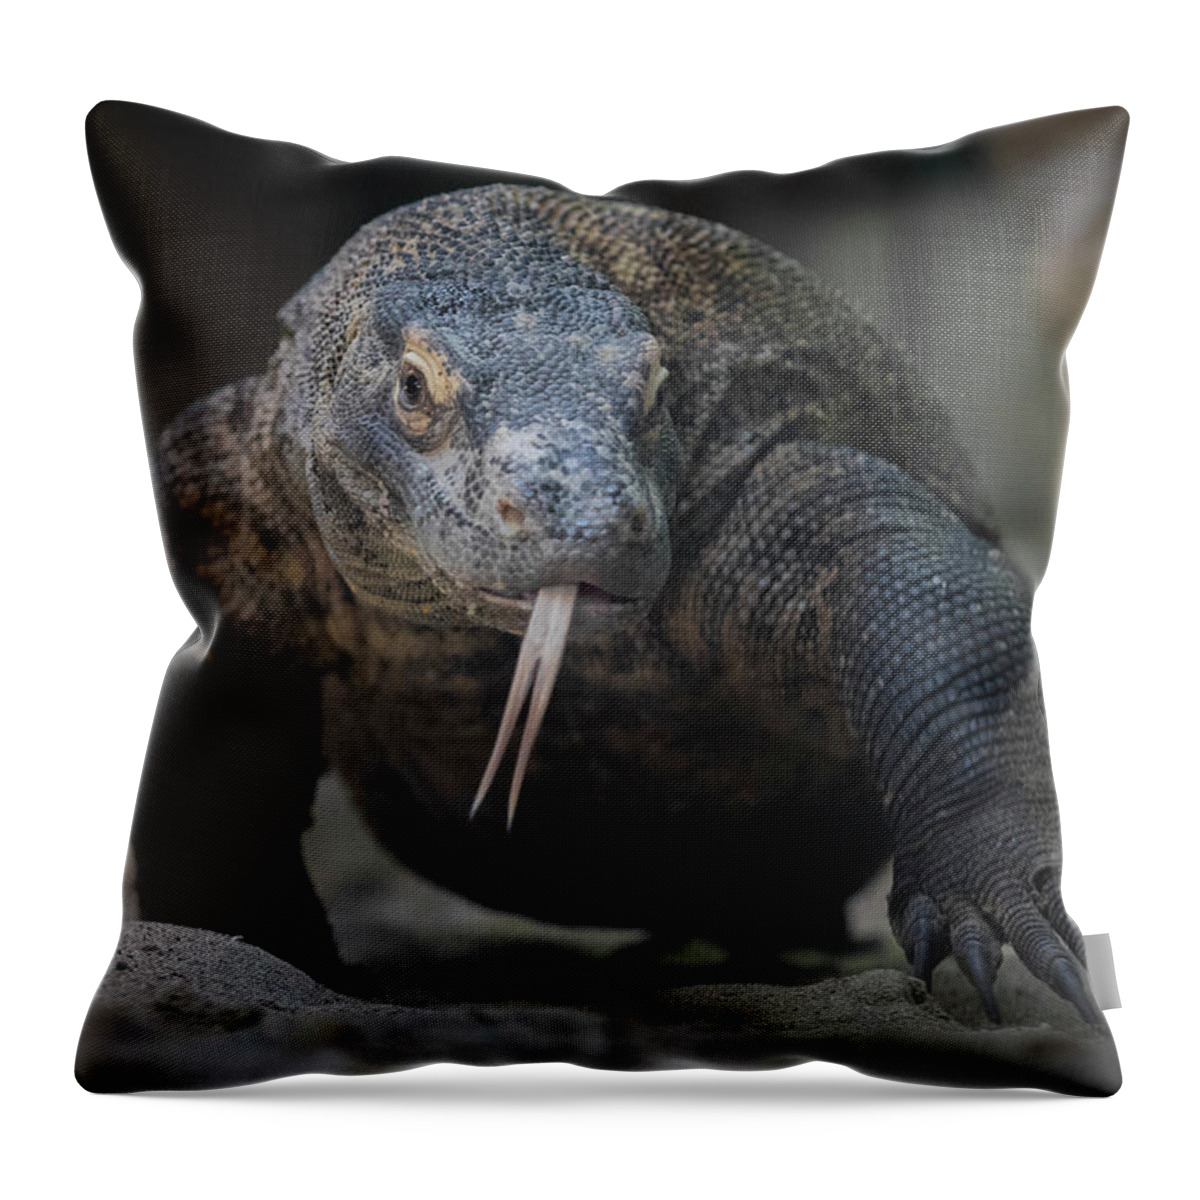 Zoo Throw Pillow featuring the photograph Komodo Dragon Crawl by Bill Cubitt